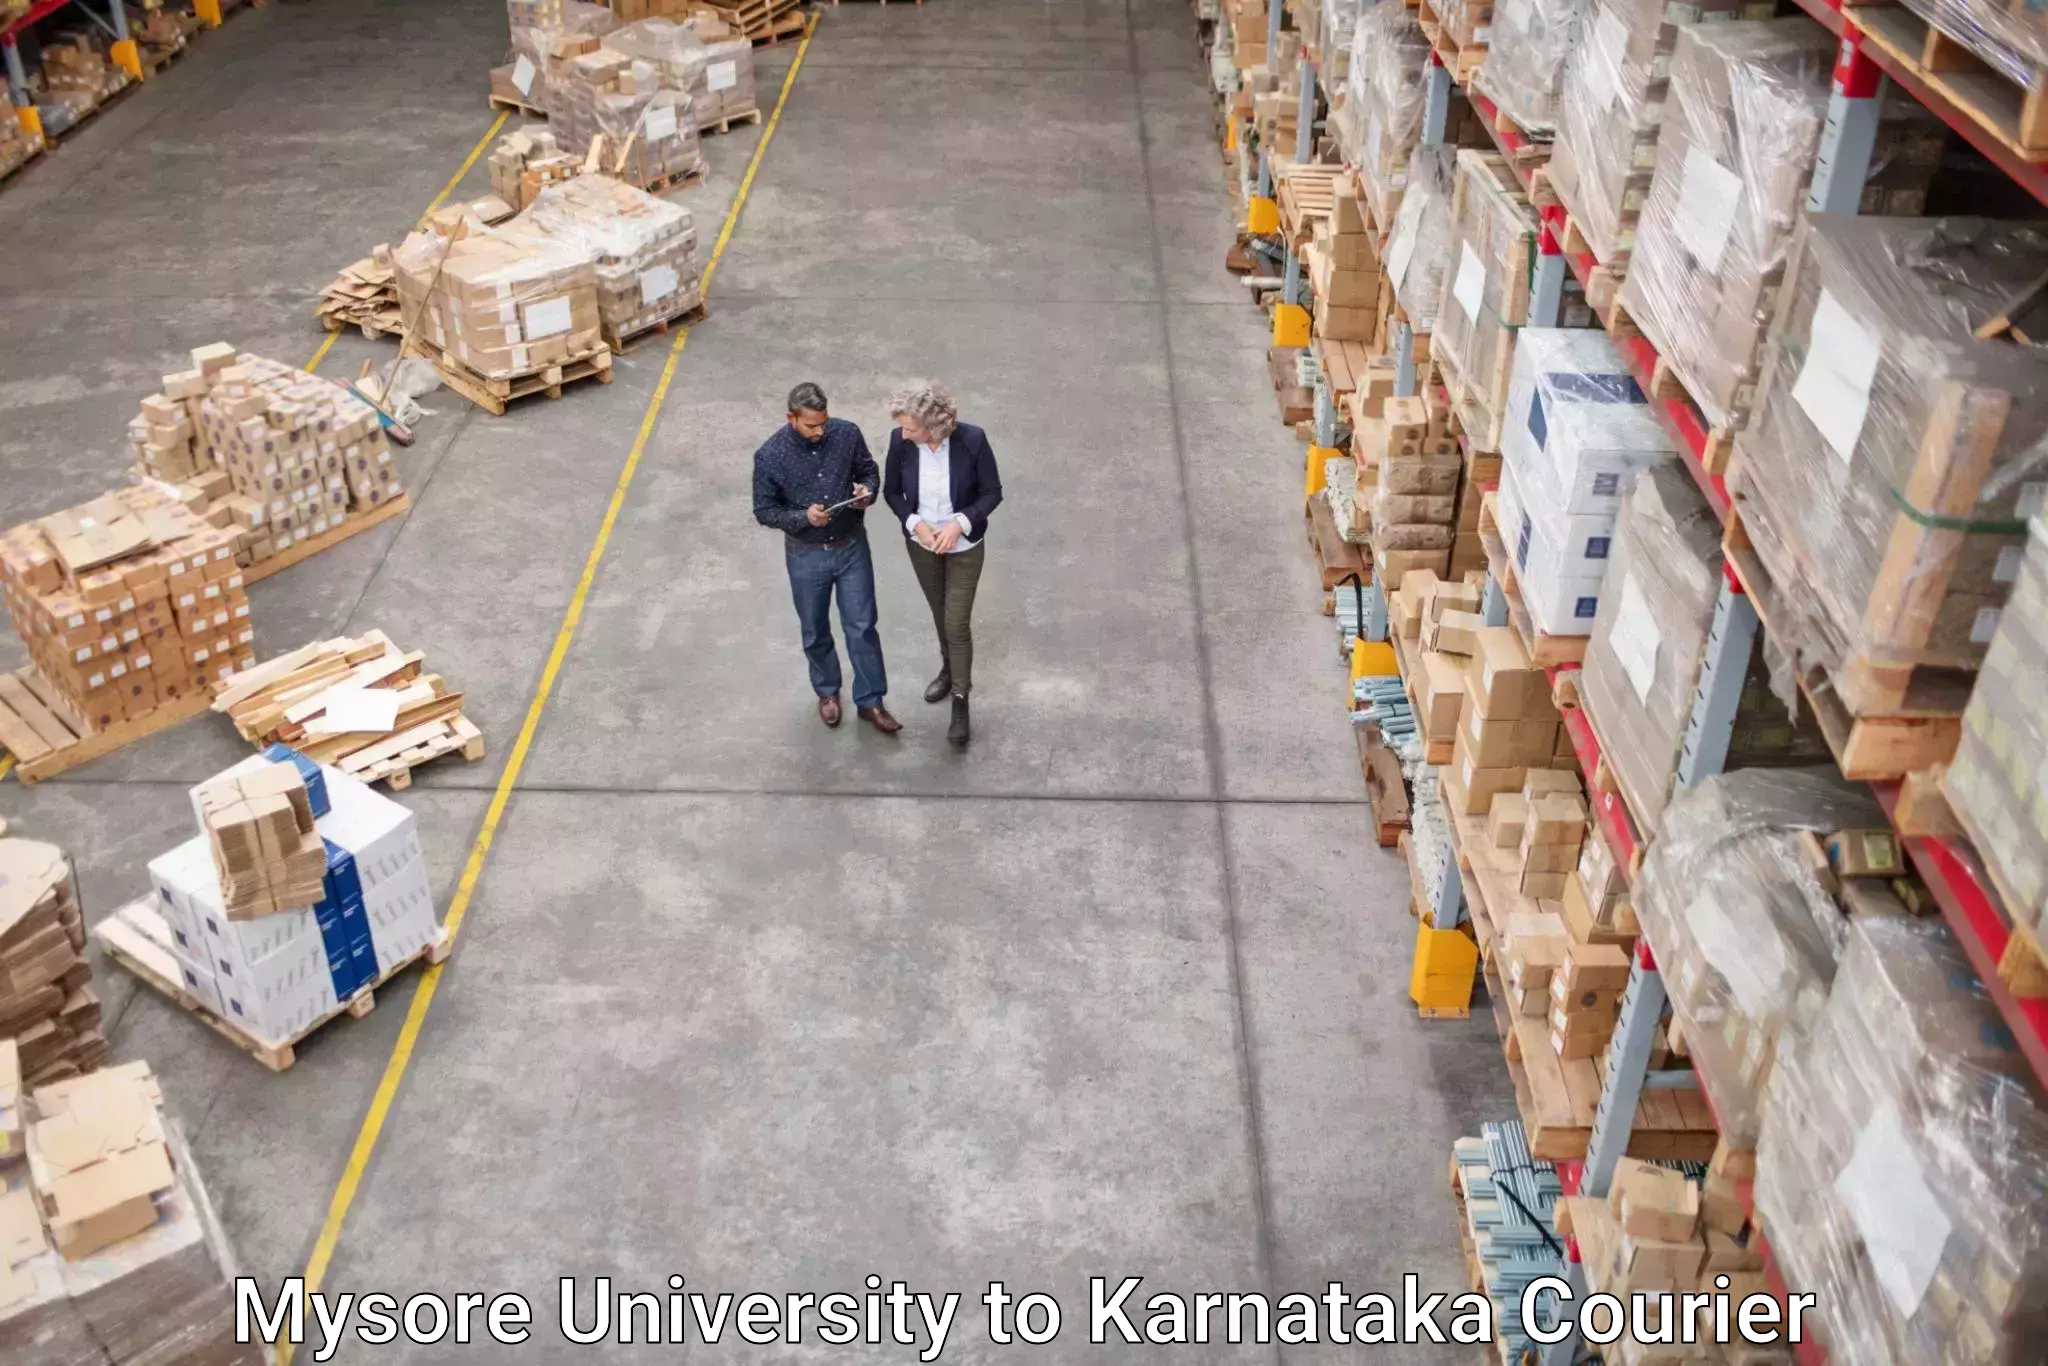 Small business couriers Mysore University to Karnataka